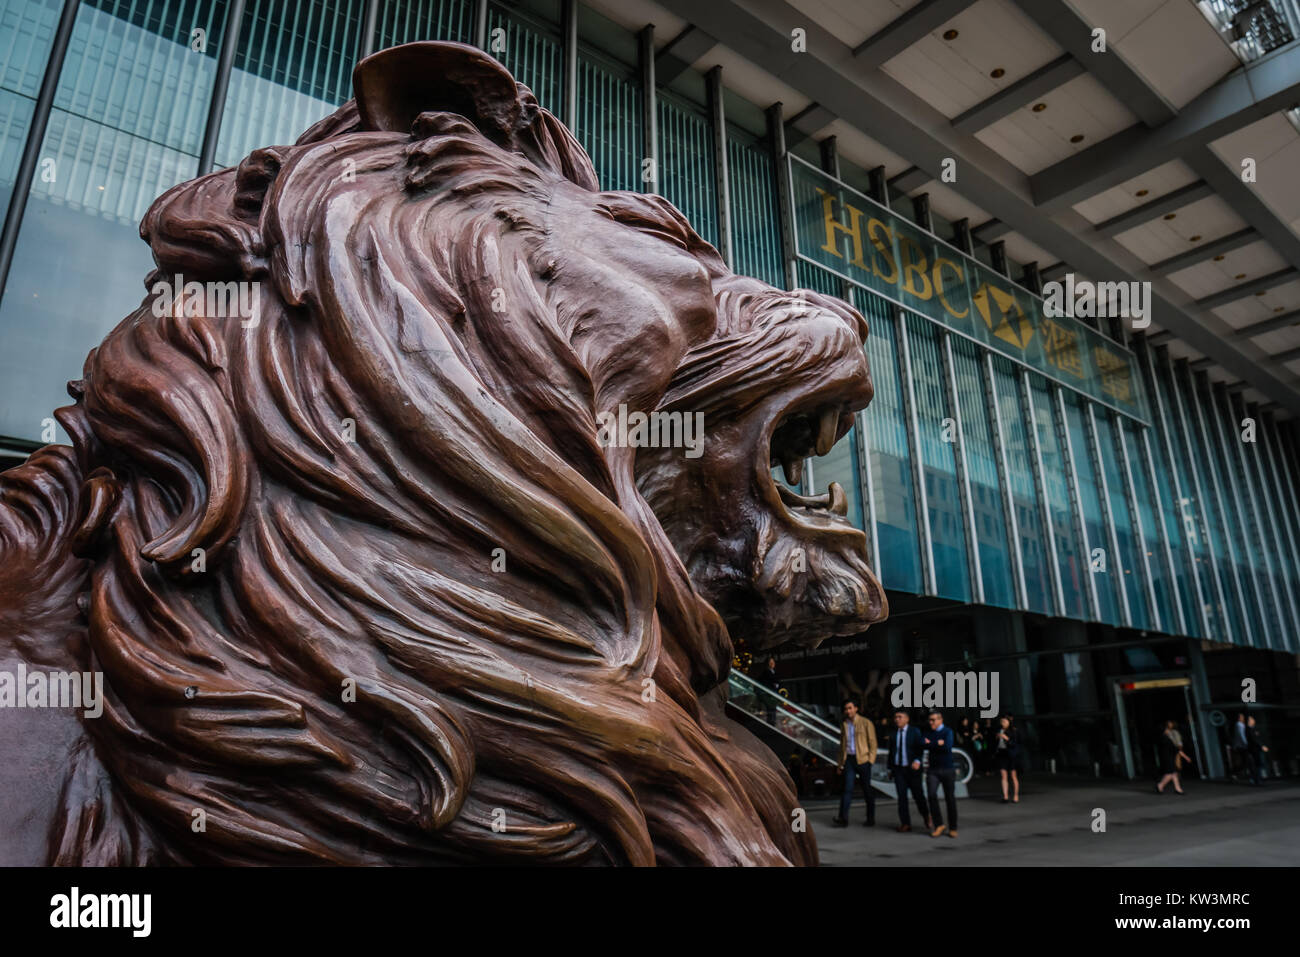 hong kong hsbc lion statue Stock Photo